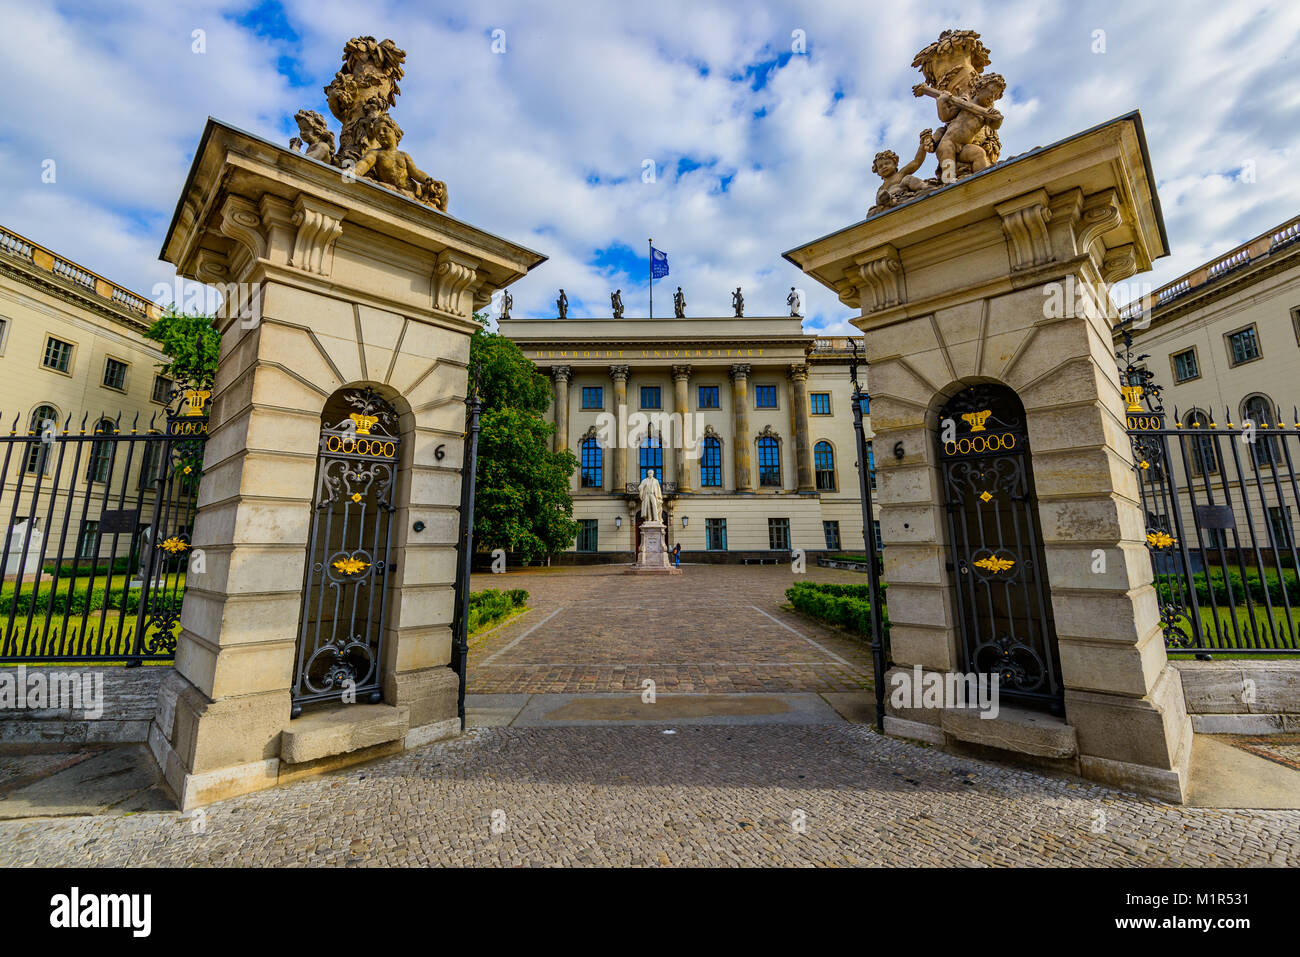 The Humboldt University of Berlin, Germany Stock Photo